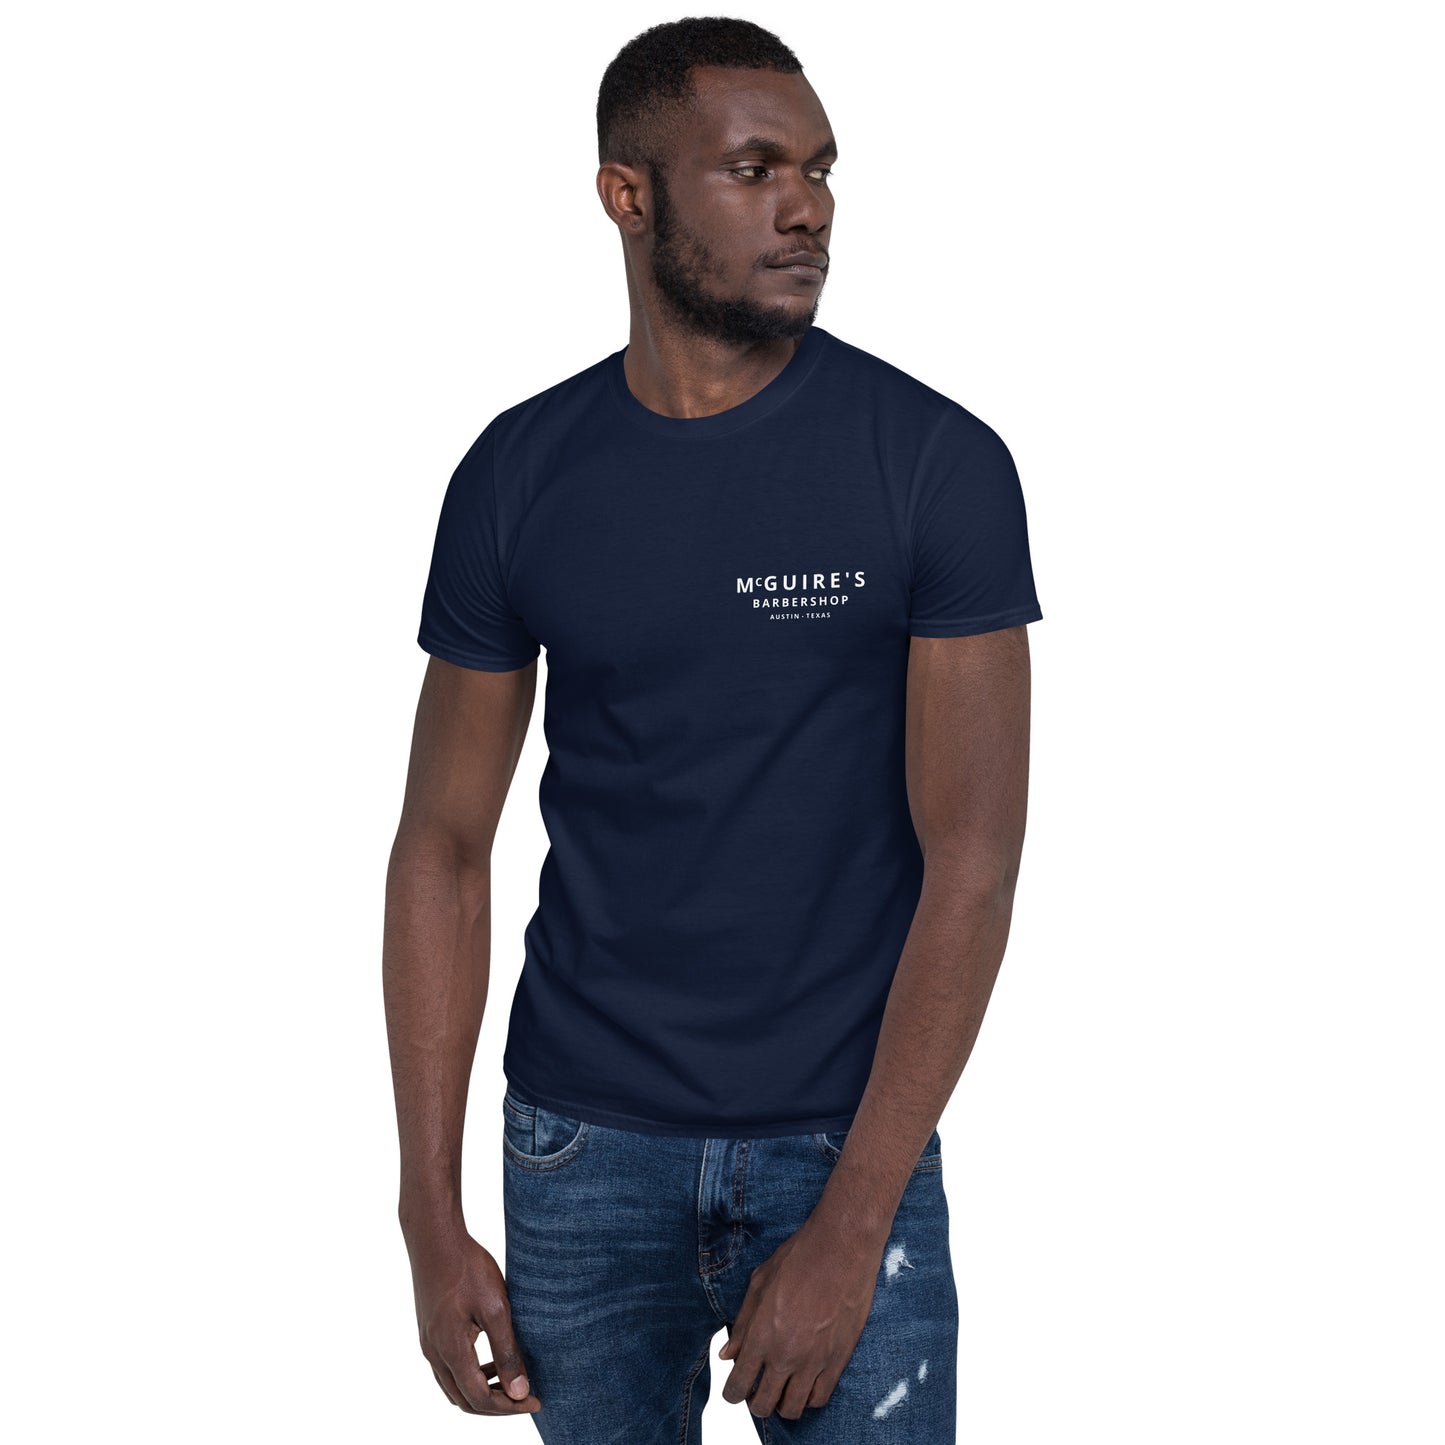 PANTHER Short-Sleeve Unisex T-Shirt